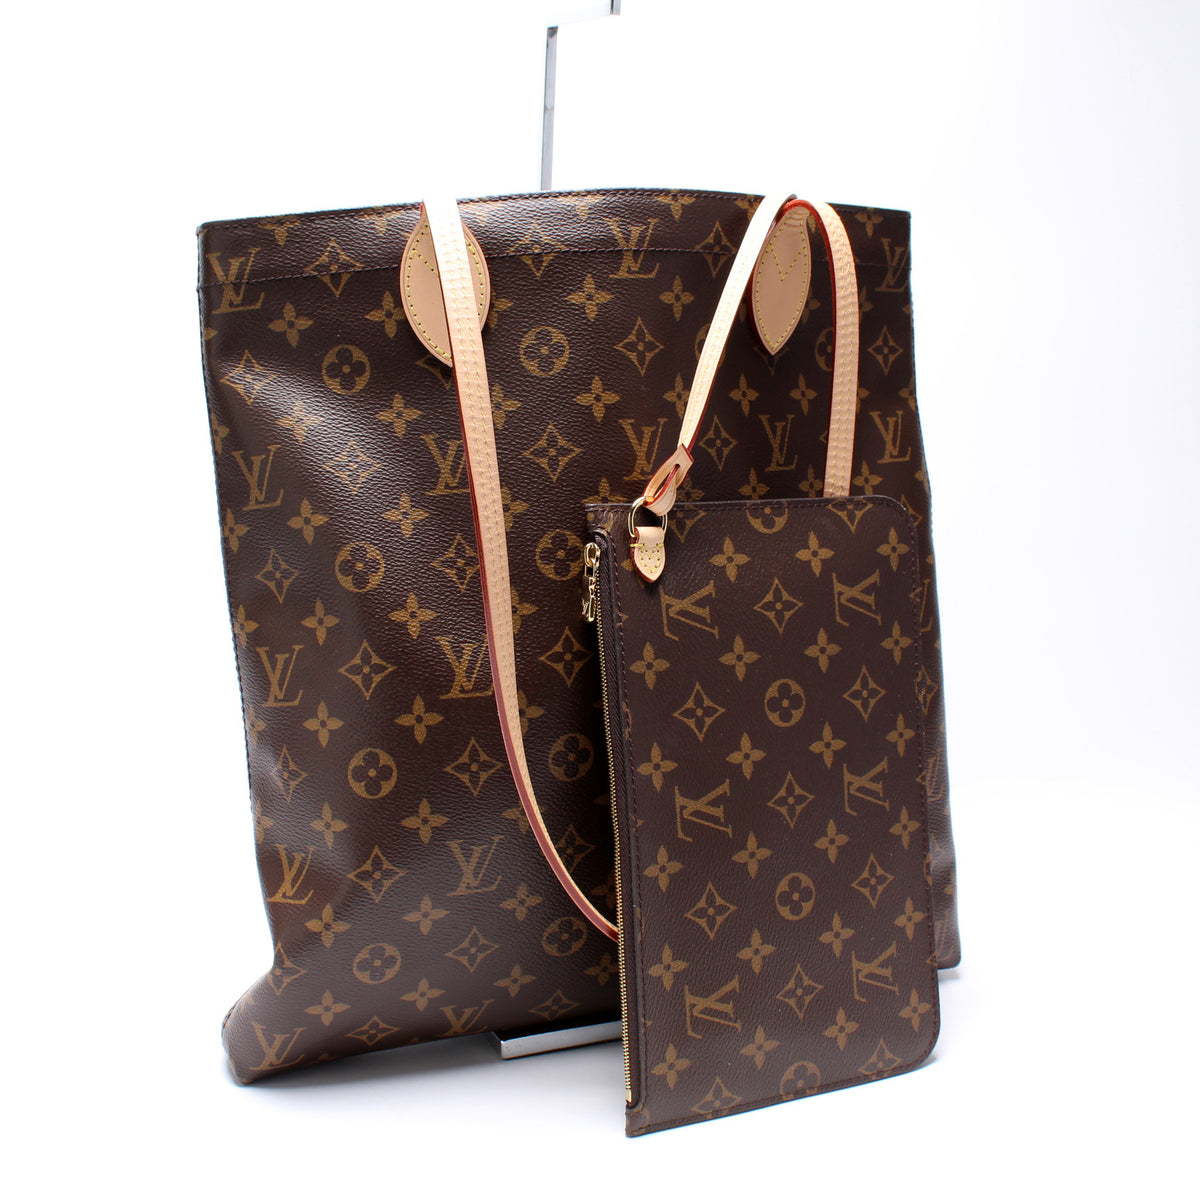 Carry It Monogram – Keeks Designer Handbags